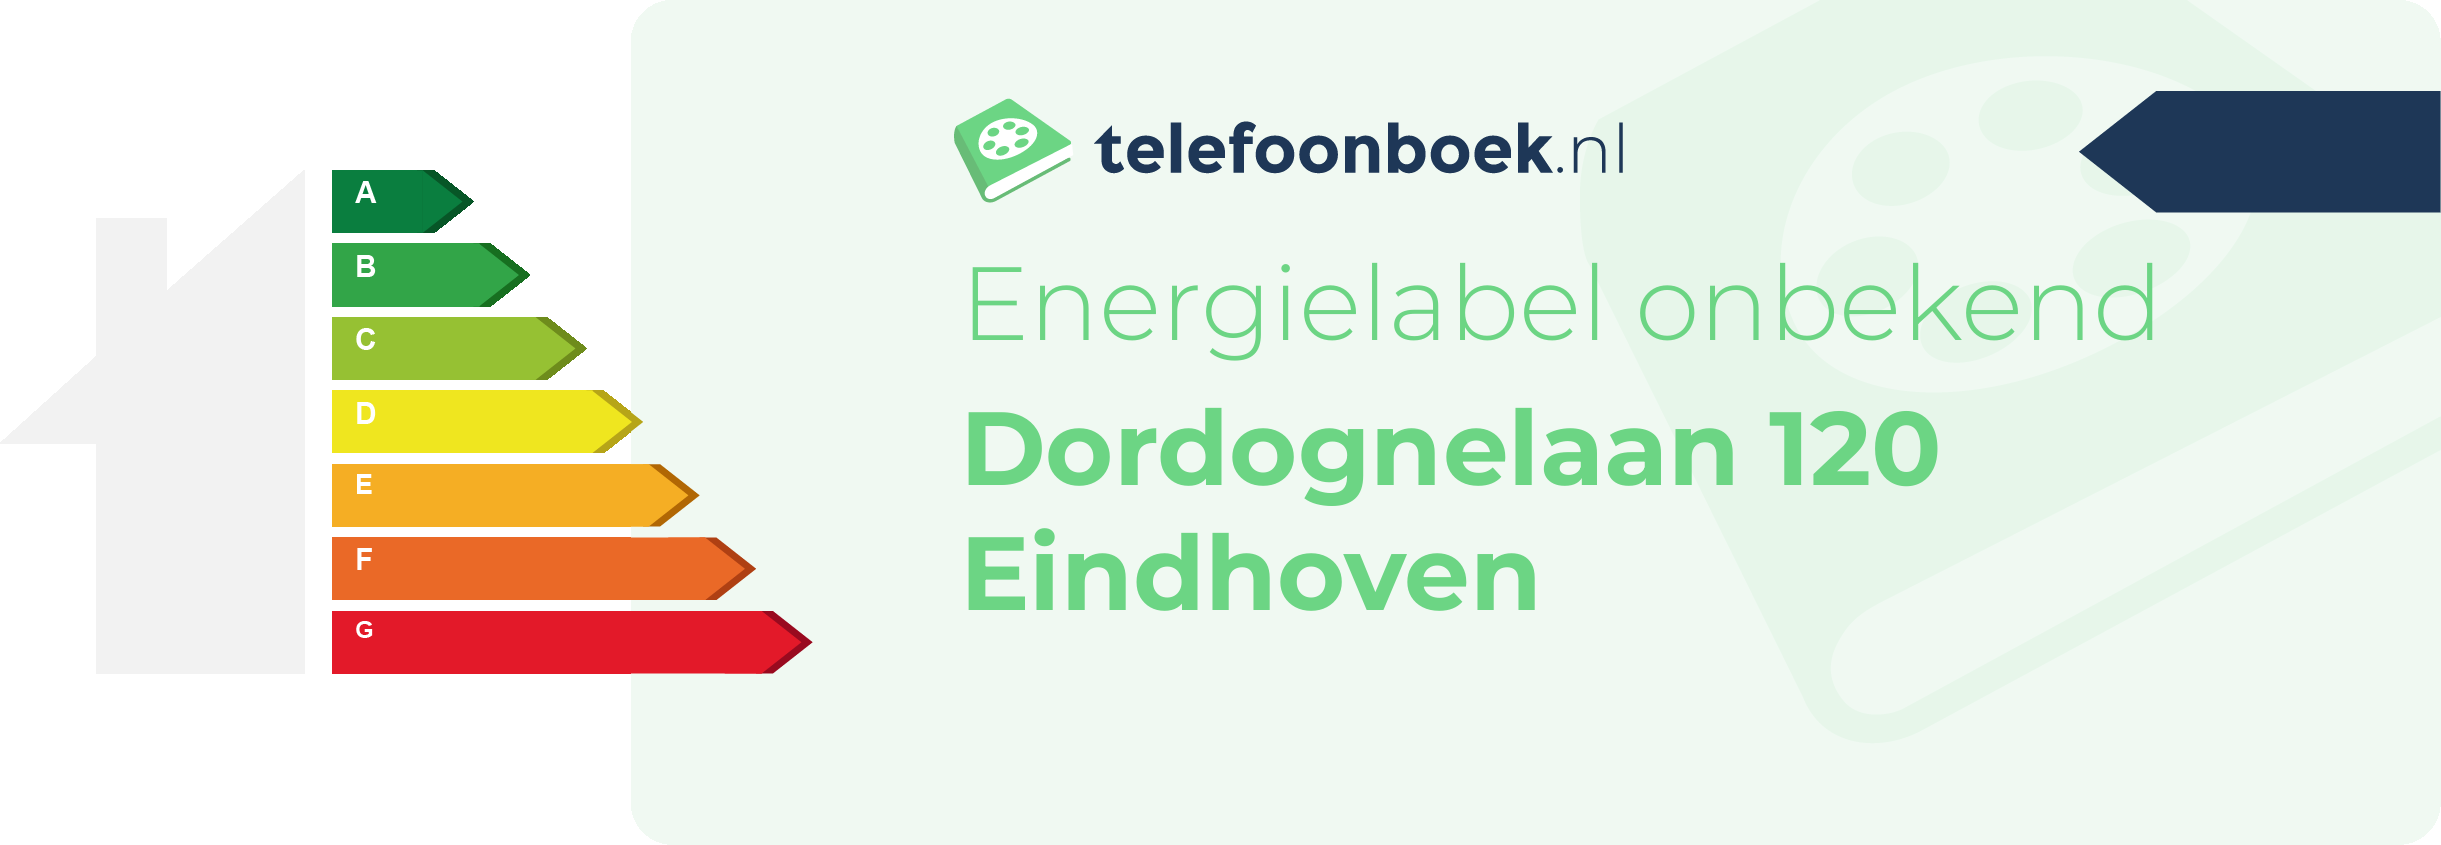 Energielabel Dordognelaan 120 Eindhoven